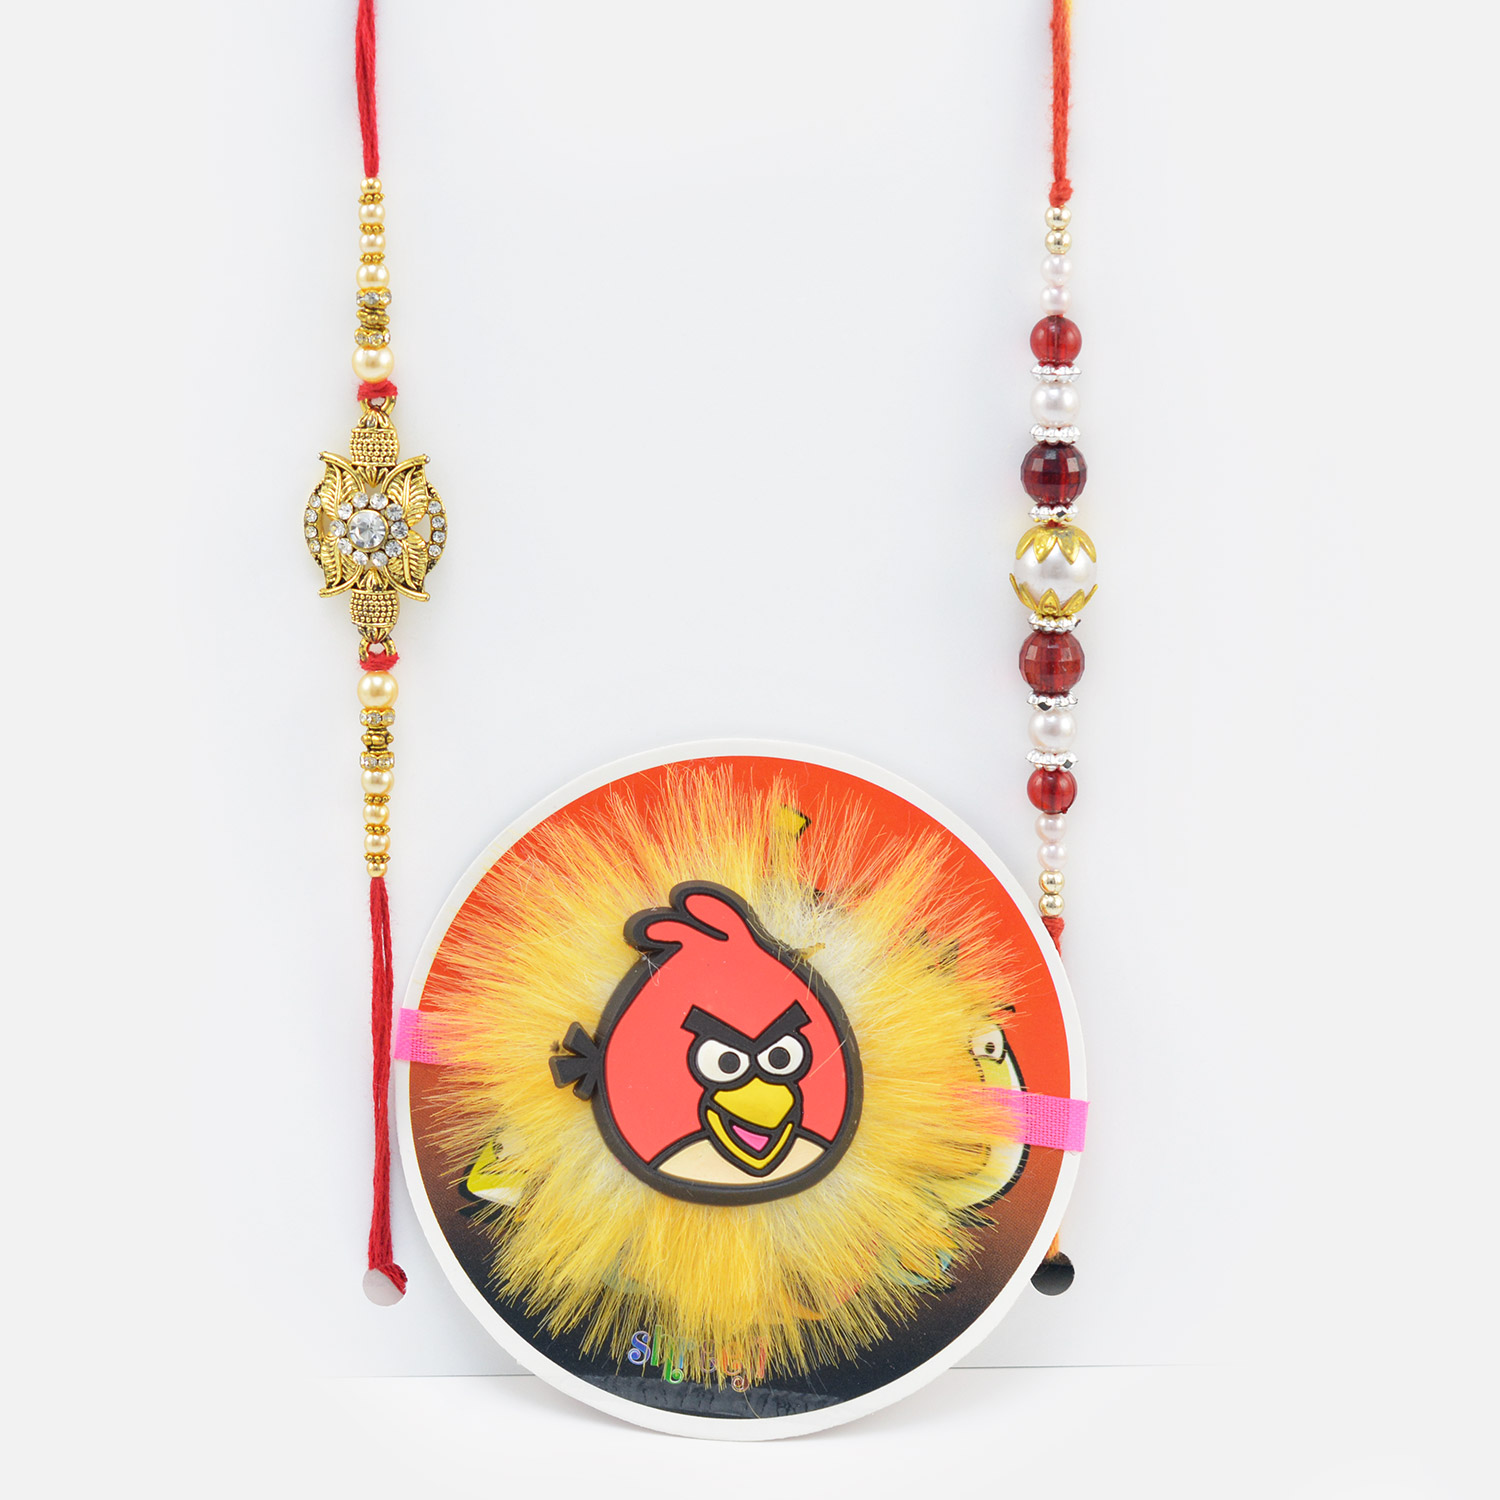 Designer Beads Rakhi Pair for Brother with a Angry Bird Kid Rakhi.